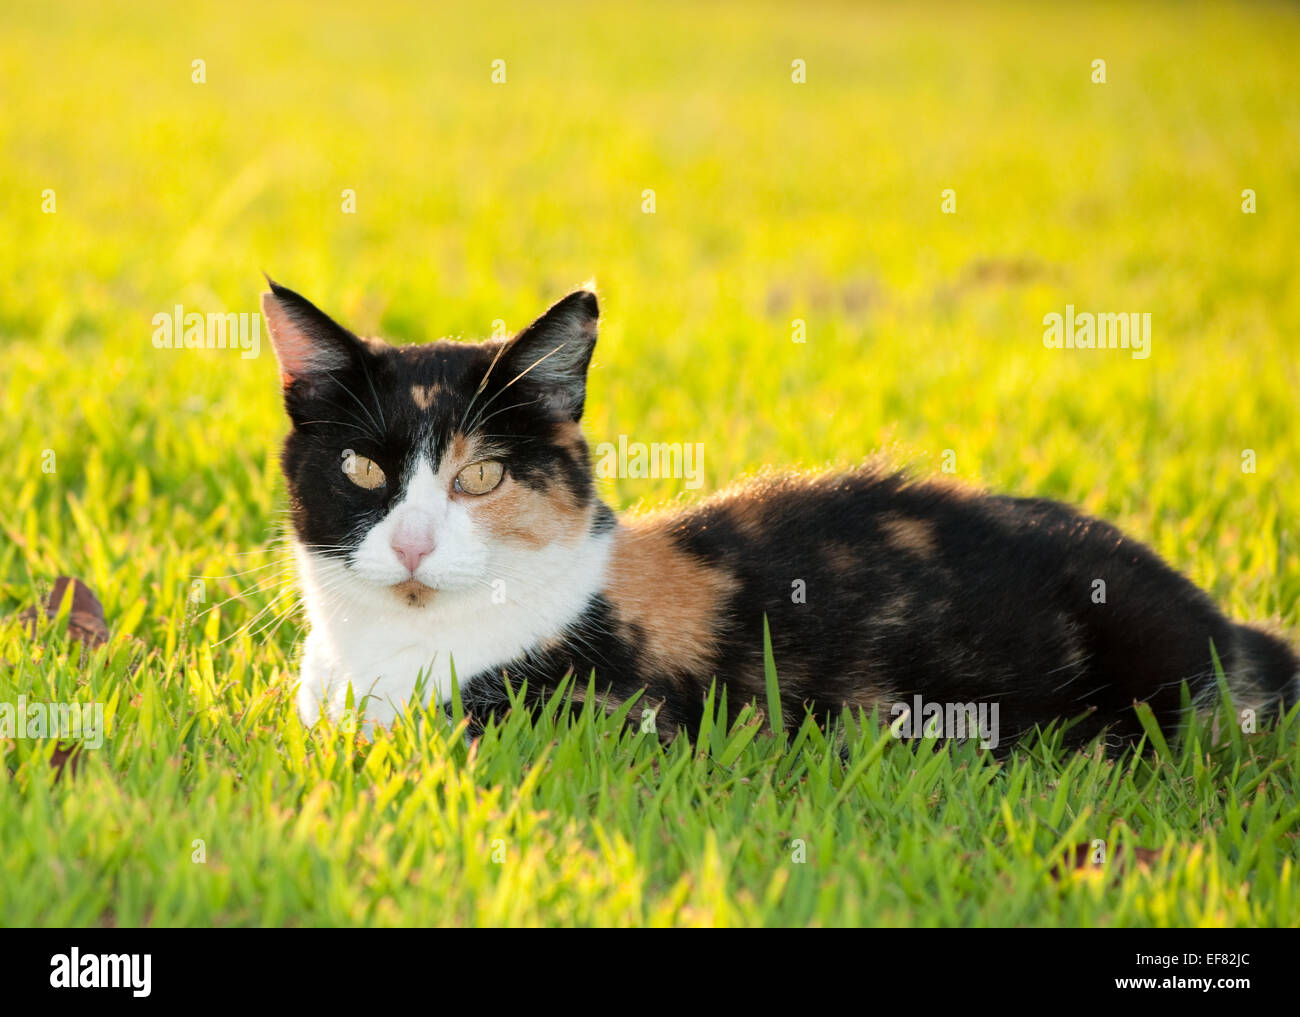 Beautiful, colorful calico cat in grass in bright sunshine Stock Photo